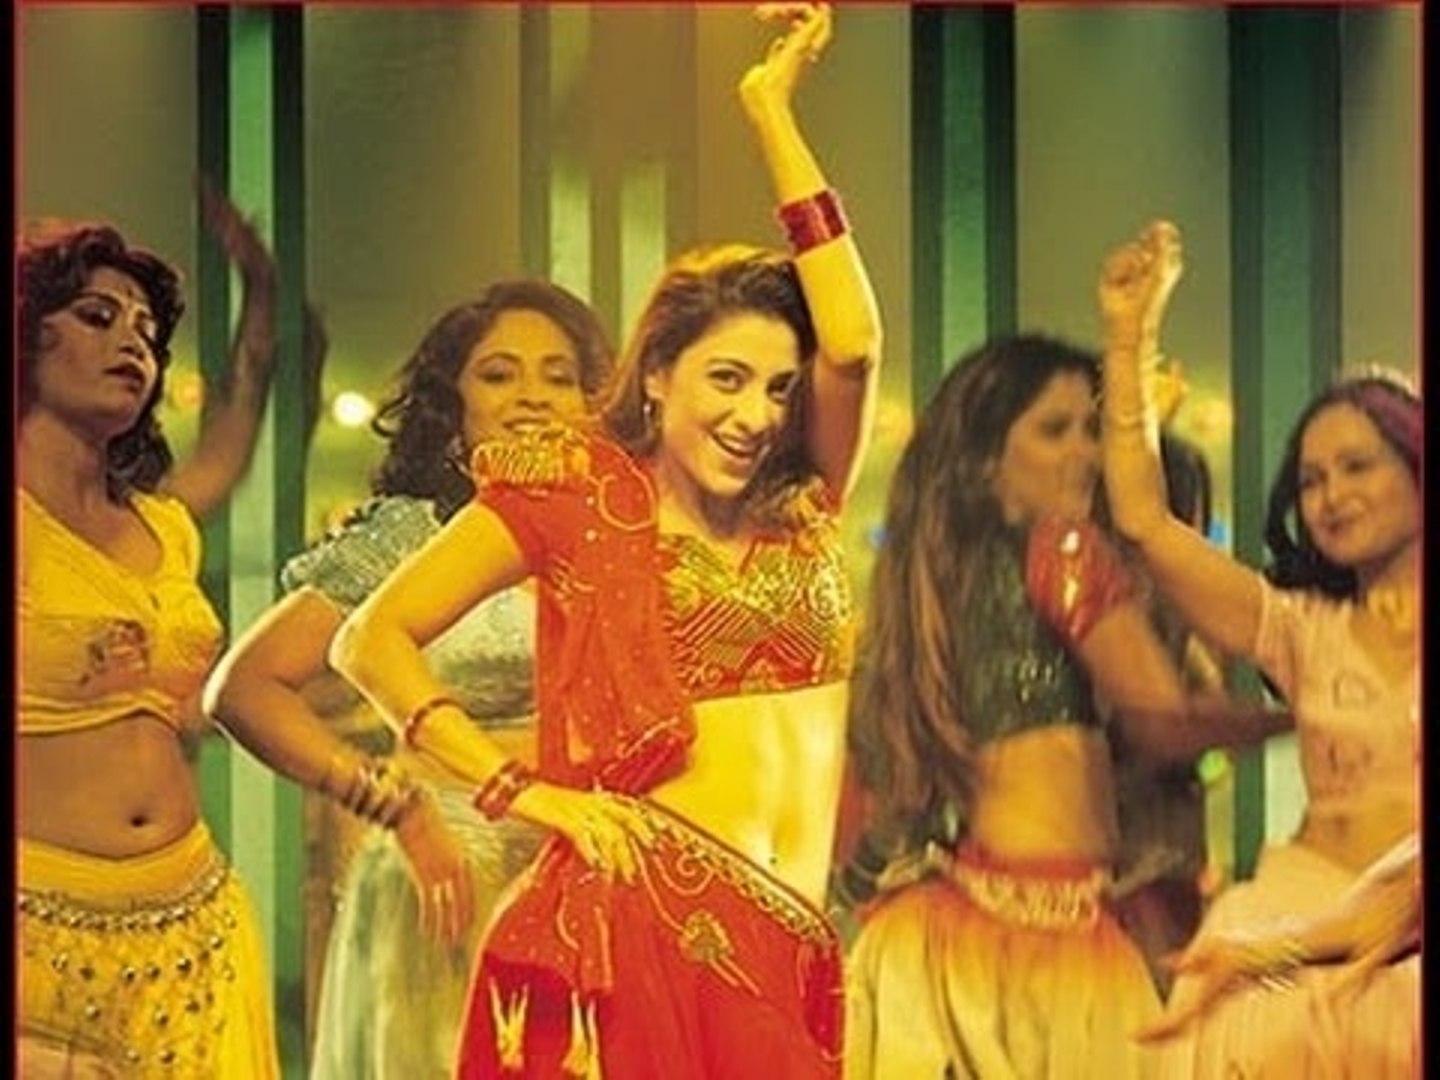 Bar Girls Full Movie Free Download In Hindi